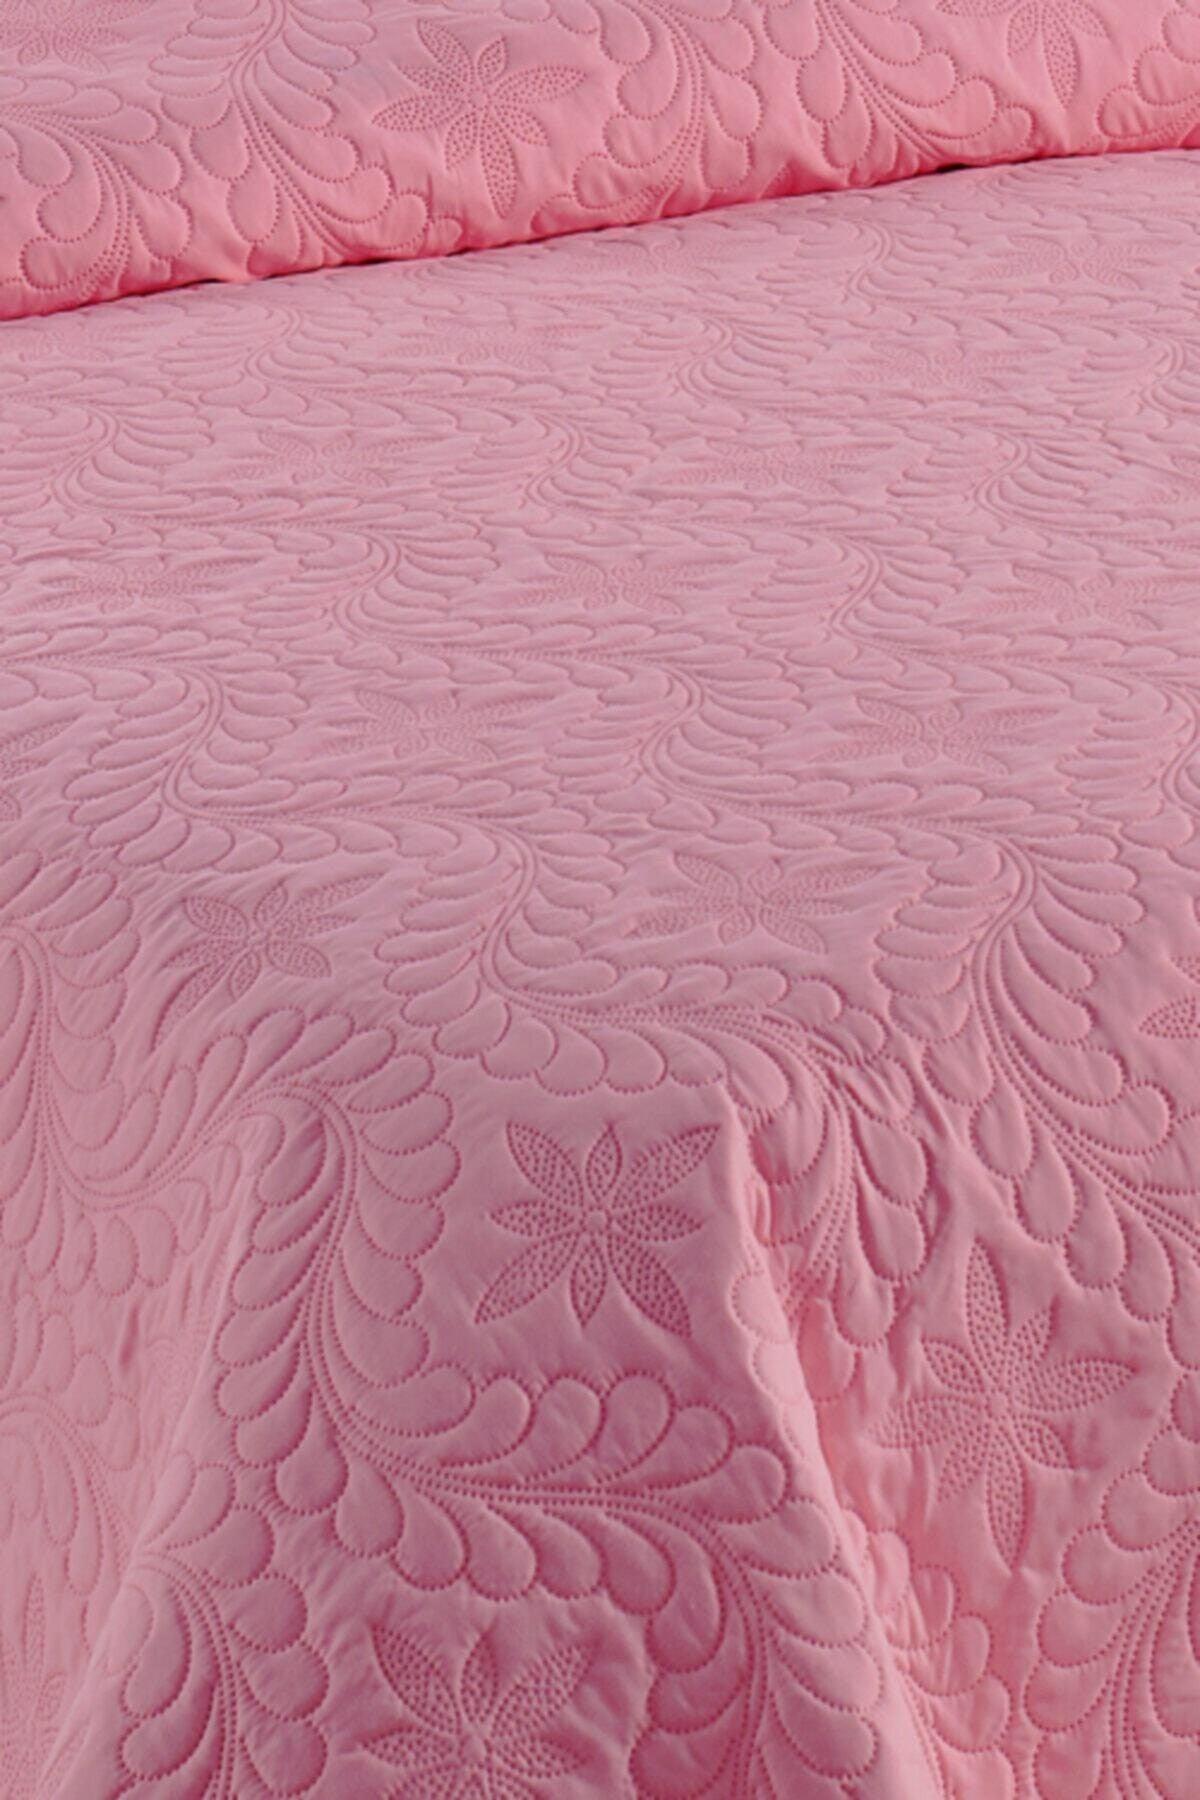 Ivy Rose Double Microfiber Quilted Bedspread - Swordslife